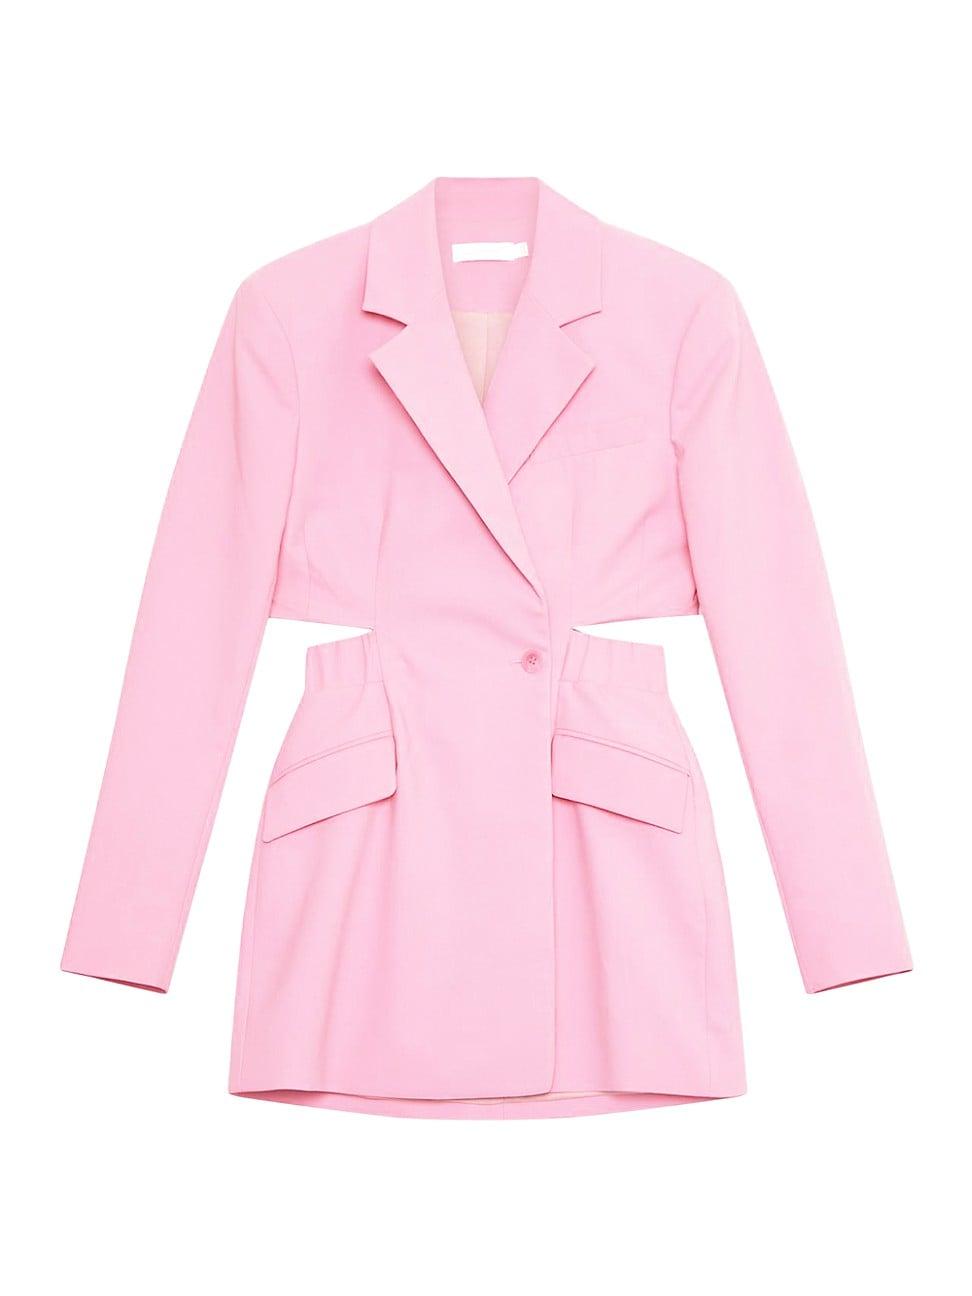 Jonathan Simkhai Kylo Cut-out Blazer in Pink | Lyst